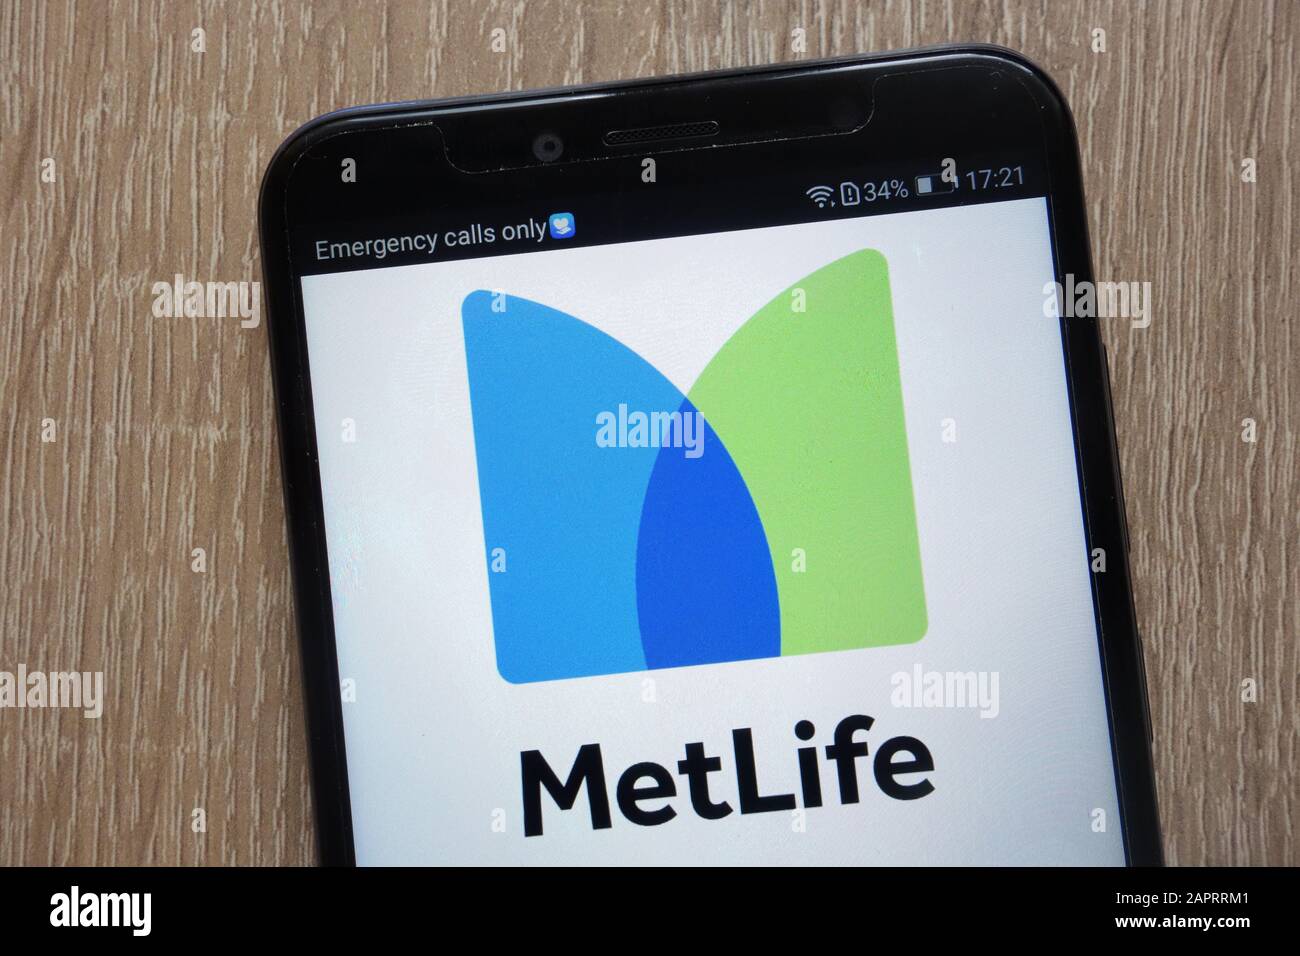 MetLife logo displayed on a modern smartphone Stock Photo